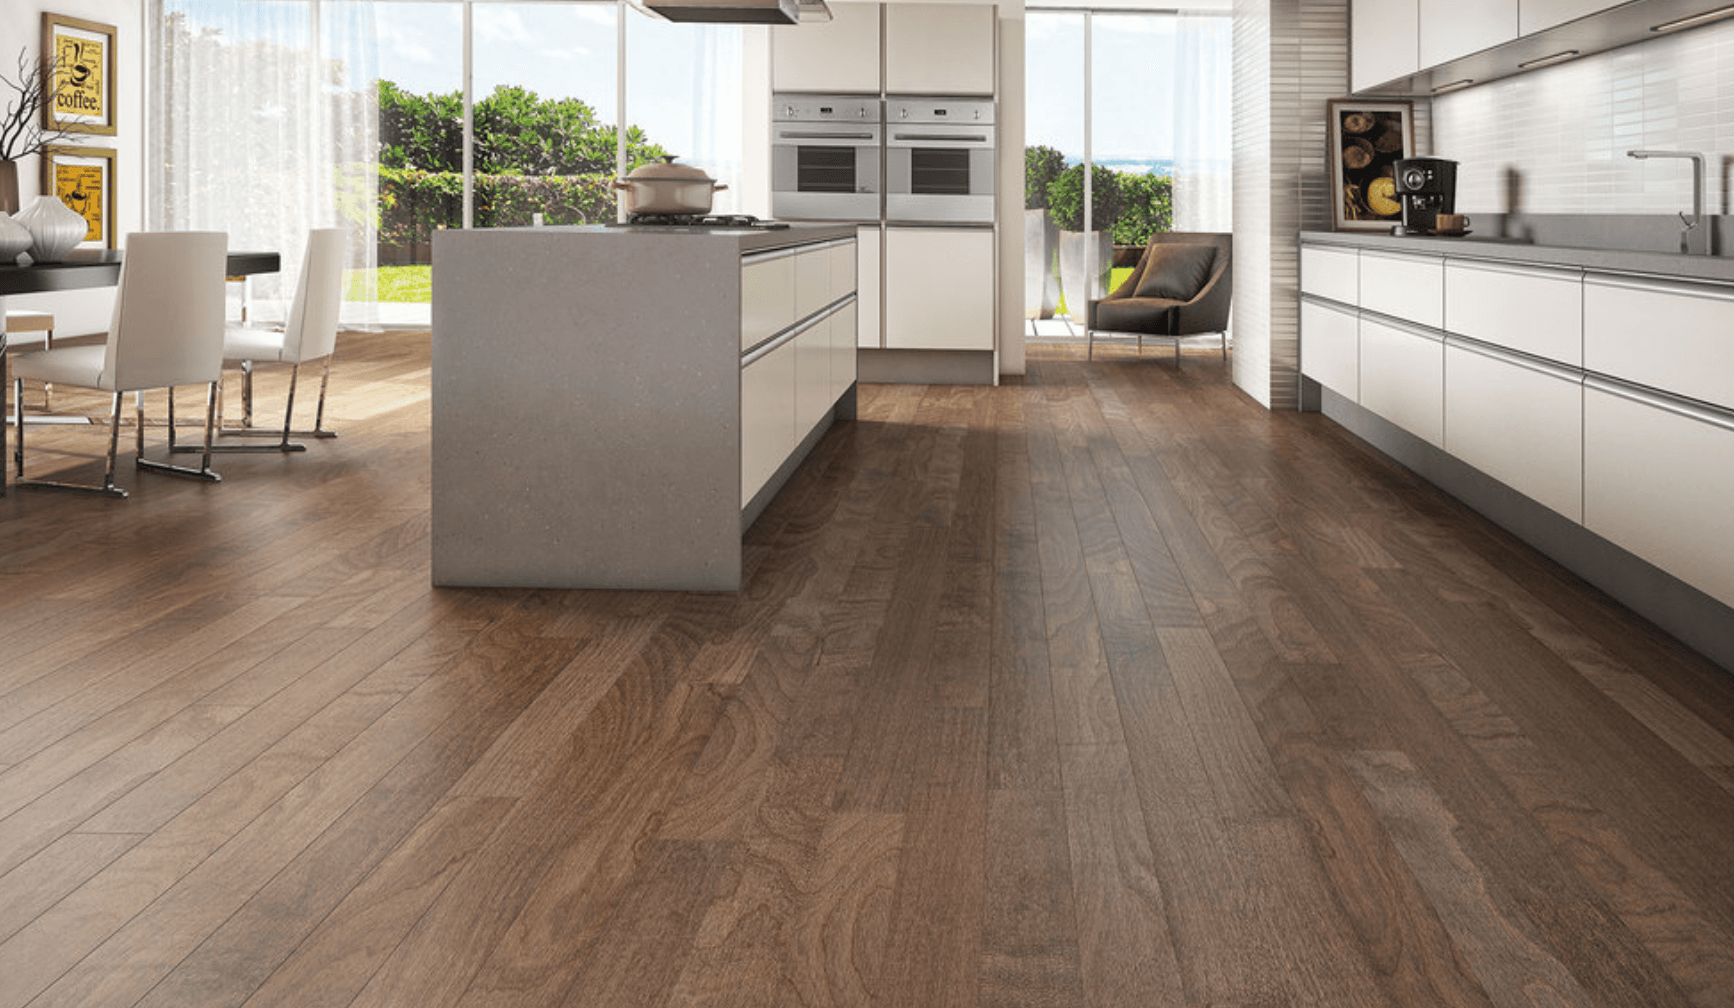 Large, bright modern kitchen with luxurious hardwood floor.